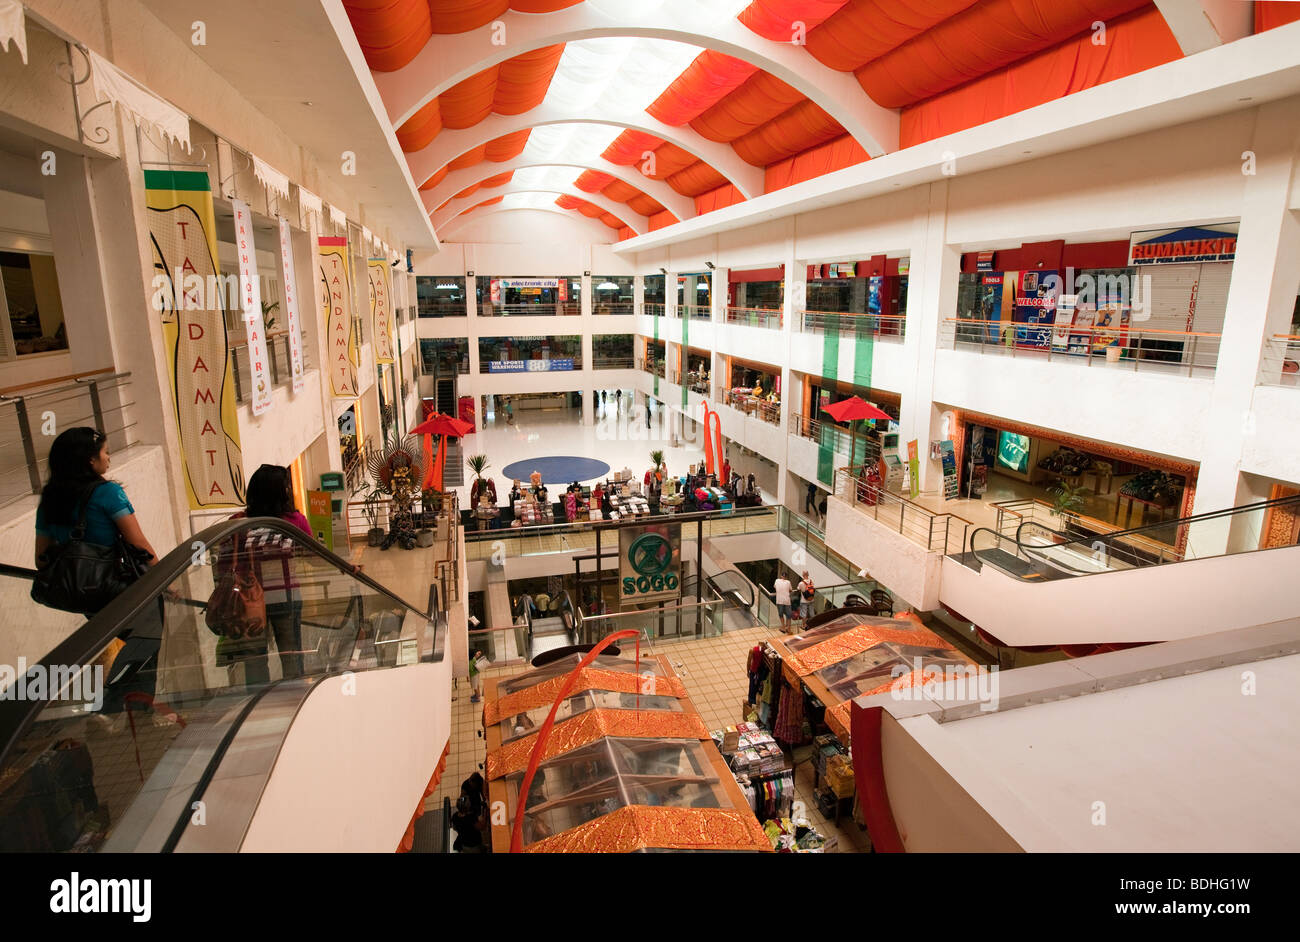 Indonesia, Bali, Kuta, Jalan Kartika Plaza, Discovery Centre Shopping Mall  Stock Photo - Alamy